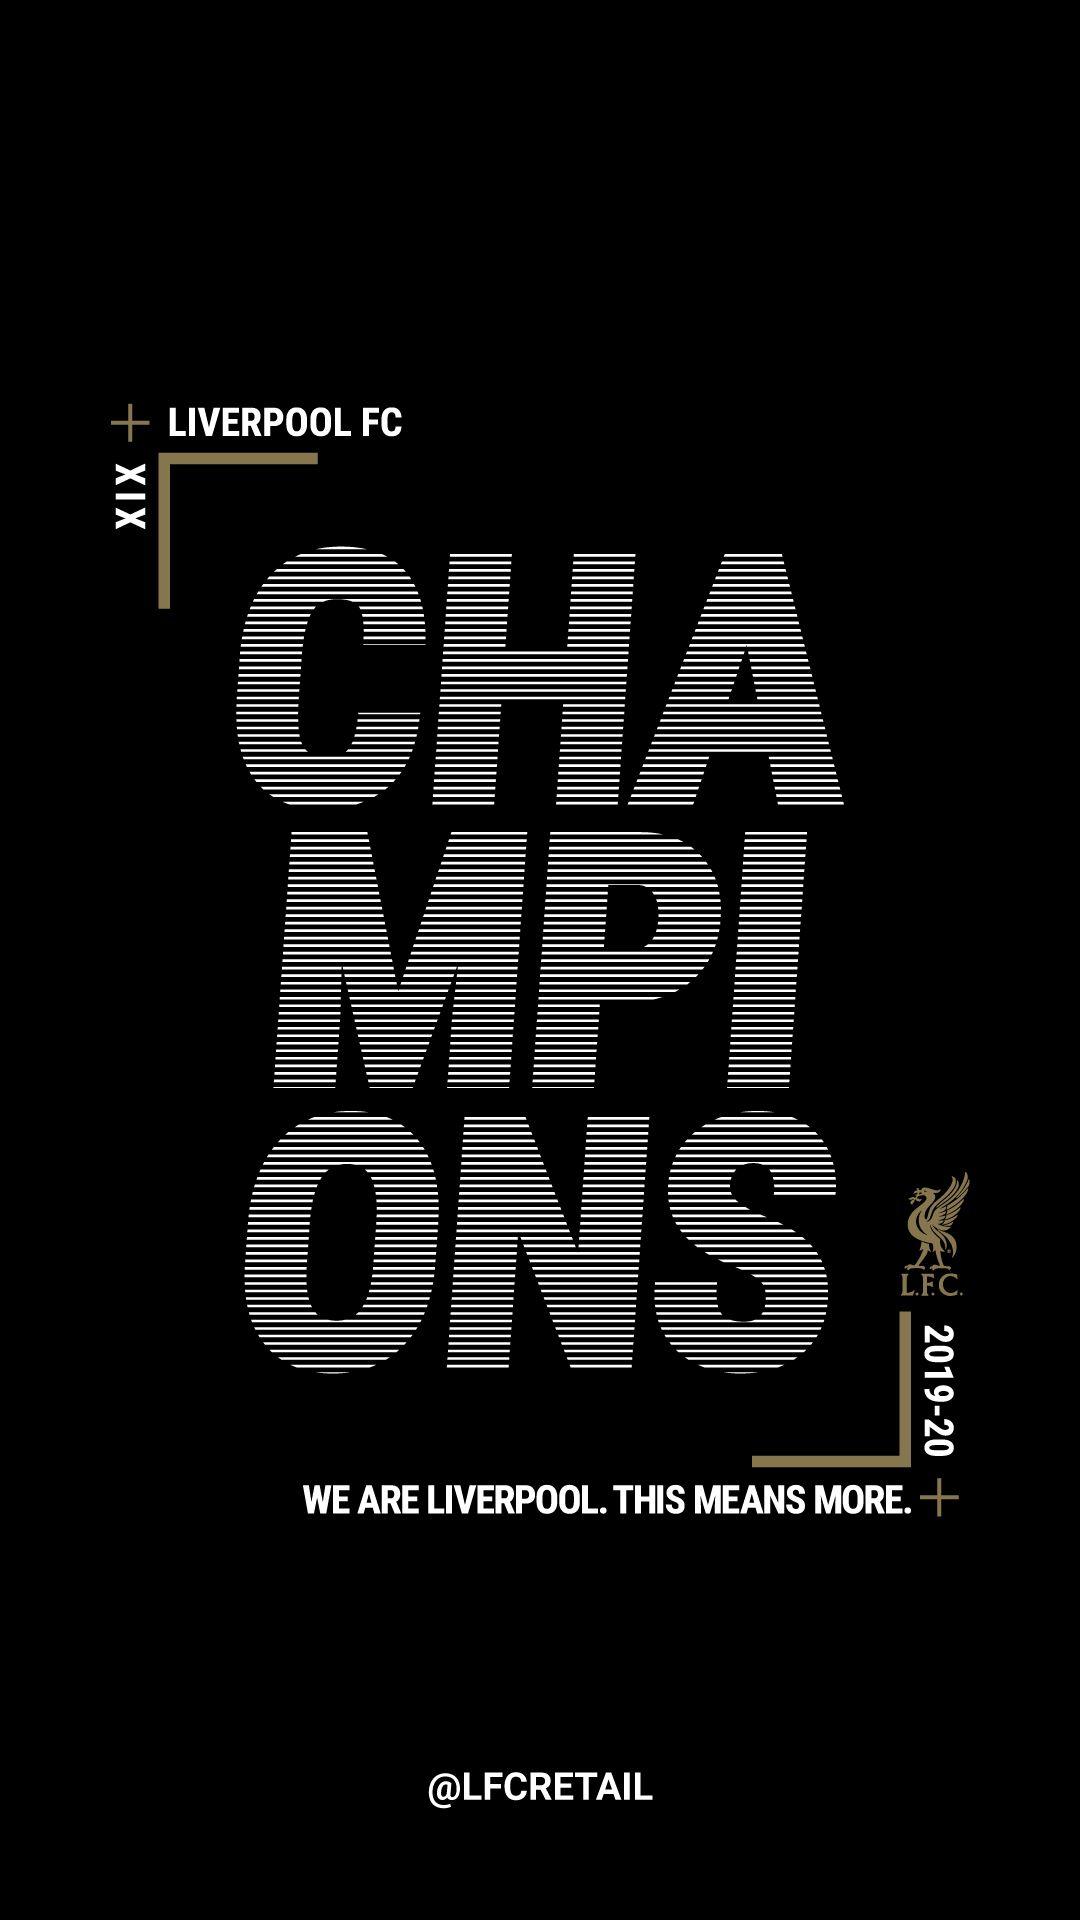 Liverpool FC Retail #LFC wallpaper design